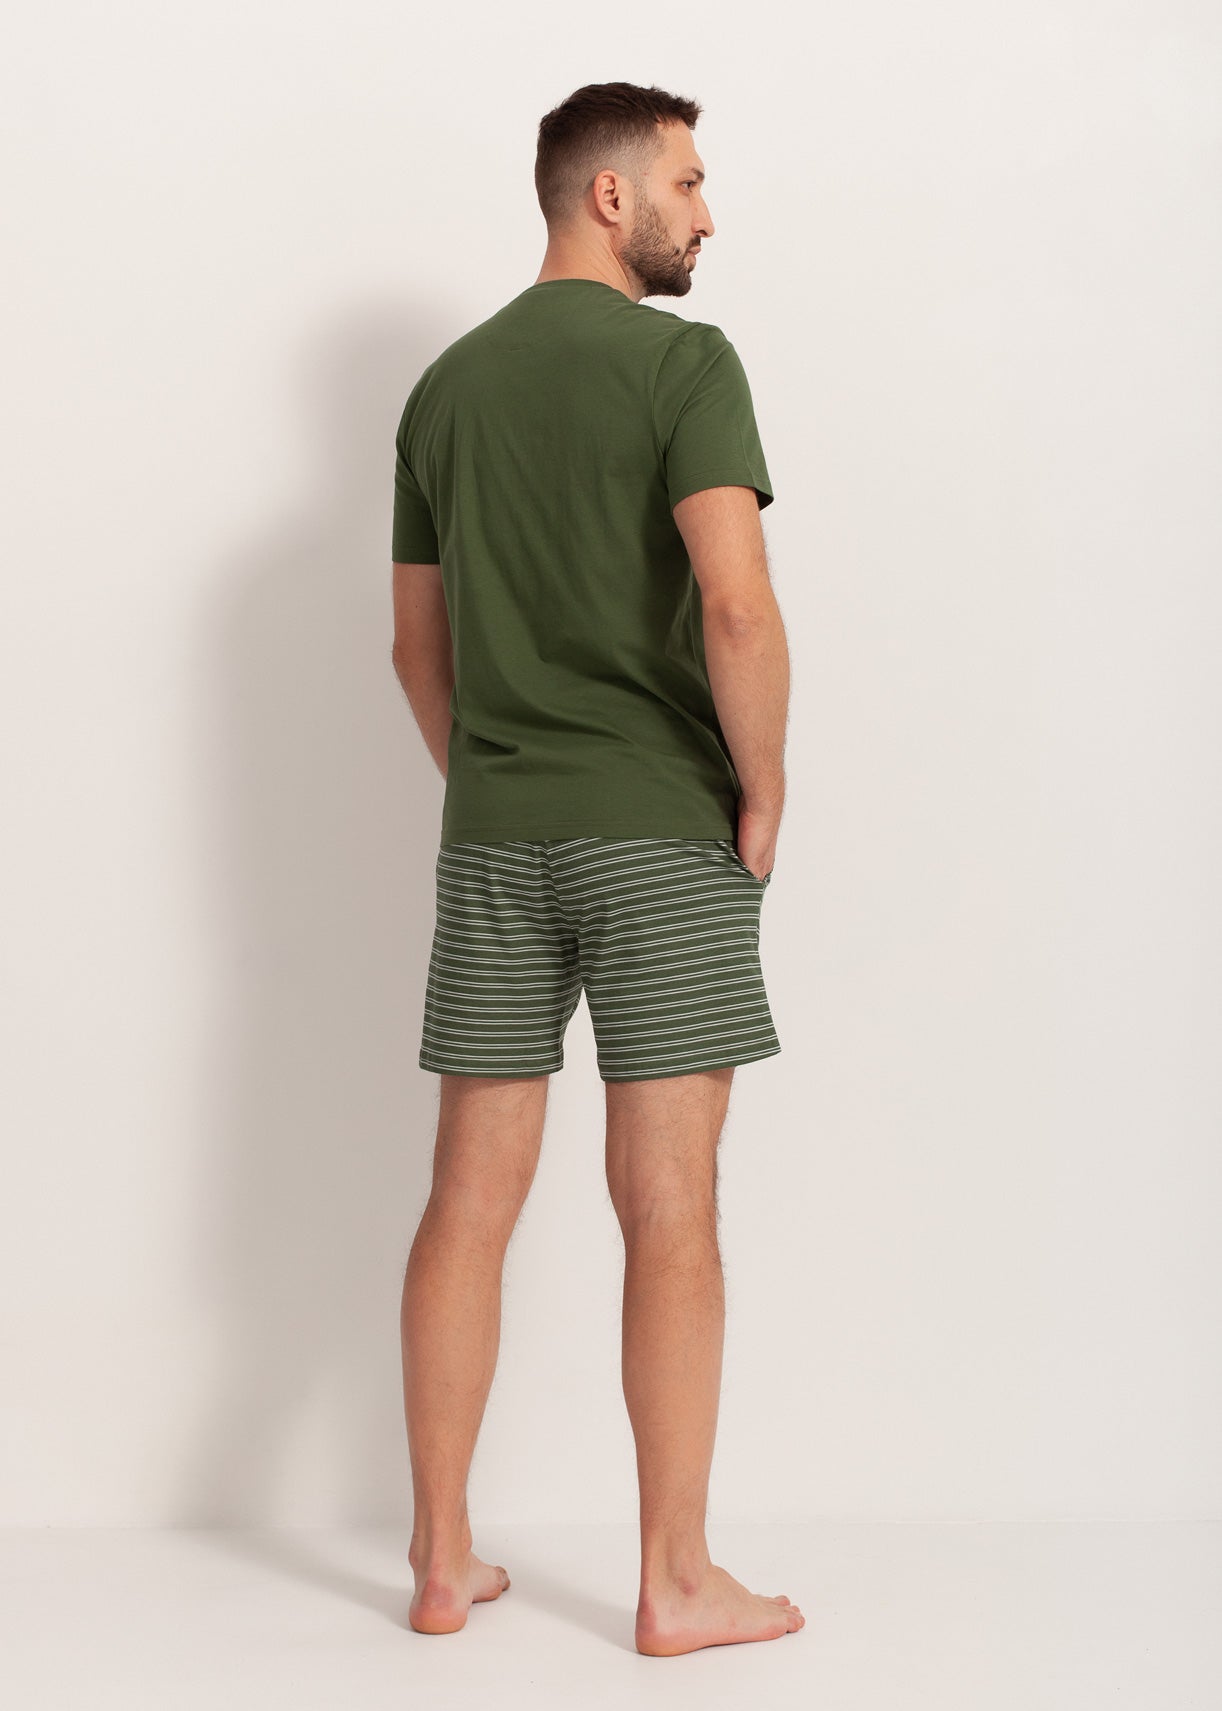 Pijama Bărbați Green Stripes Bumbac